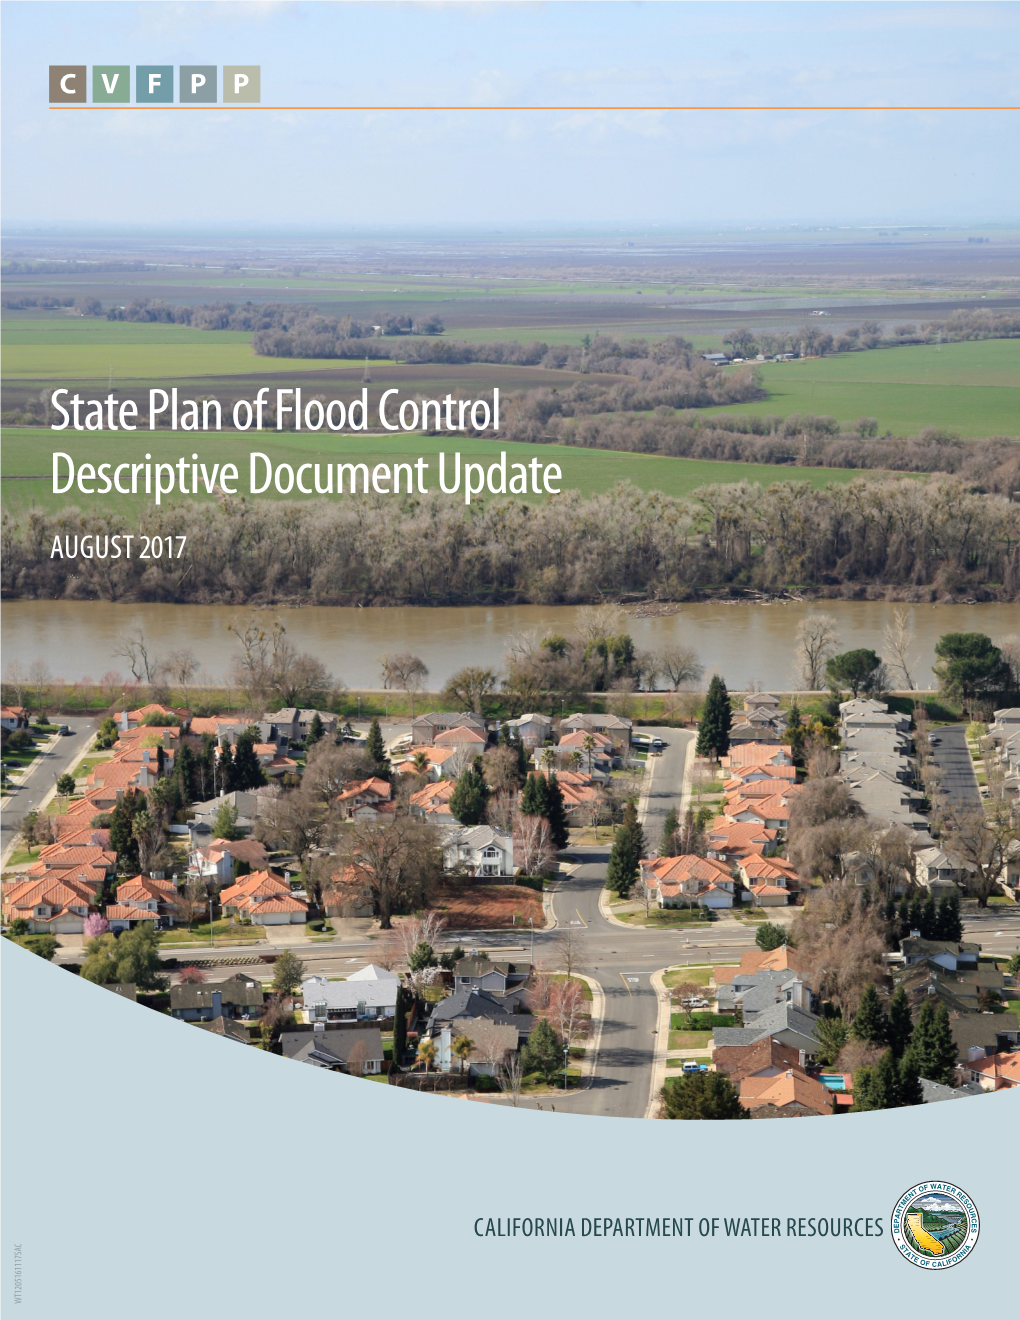 CVFPP State Plan of Flood Control Descriptive Document Update